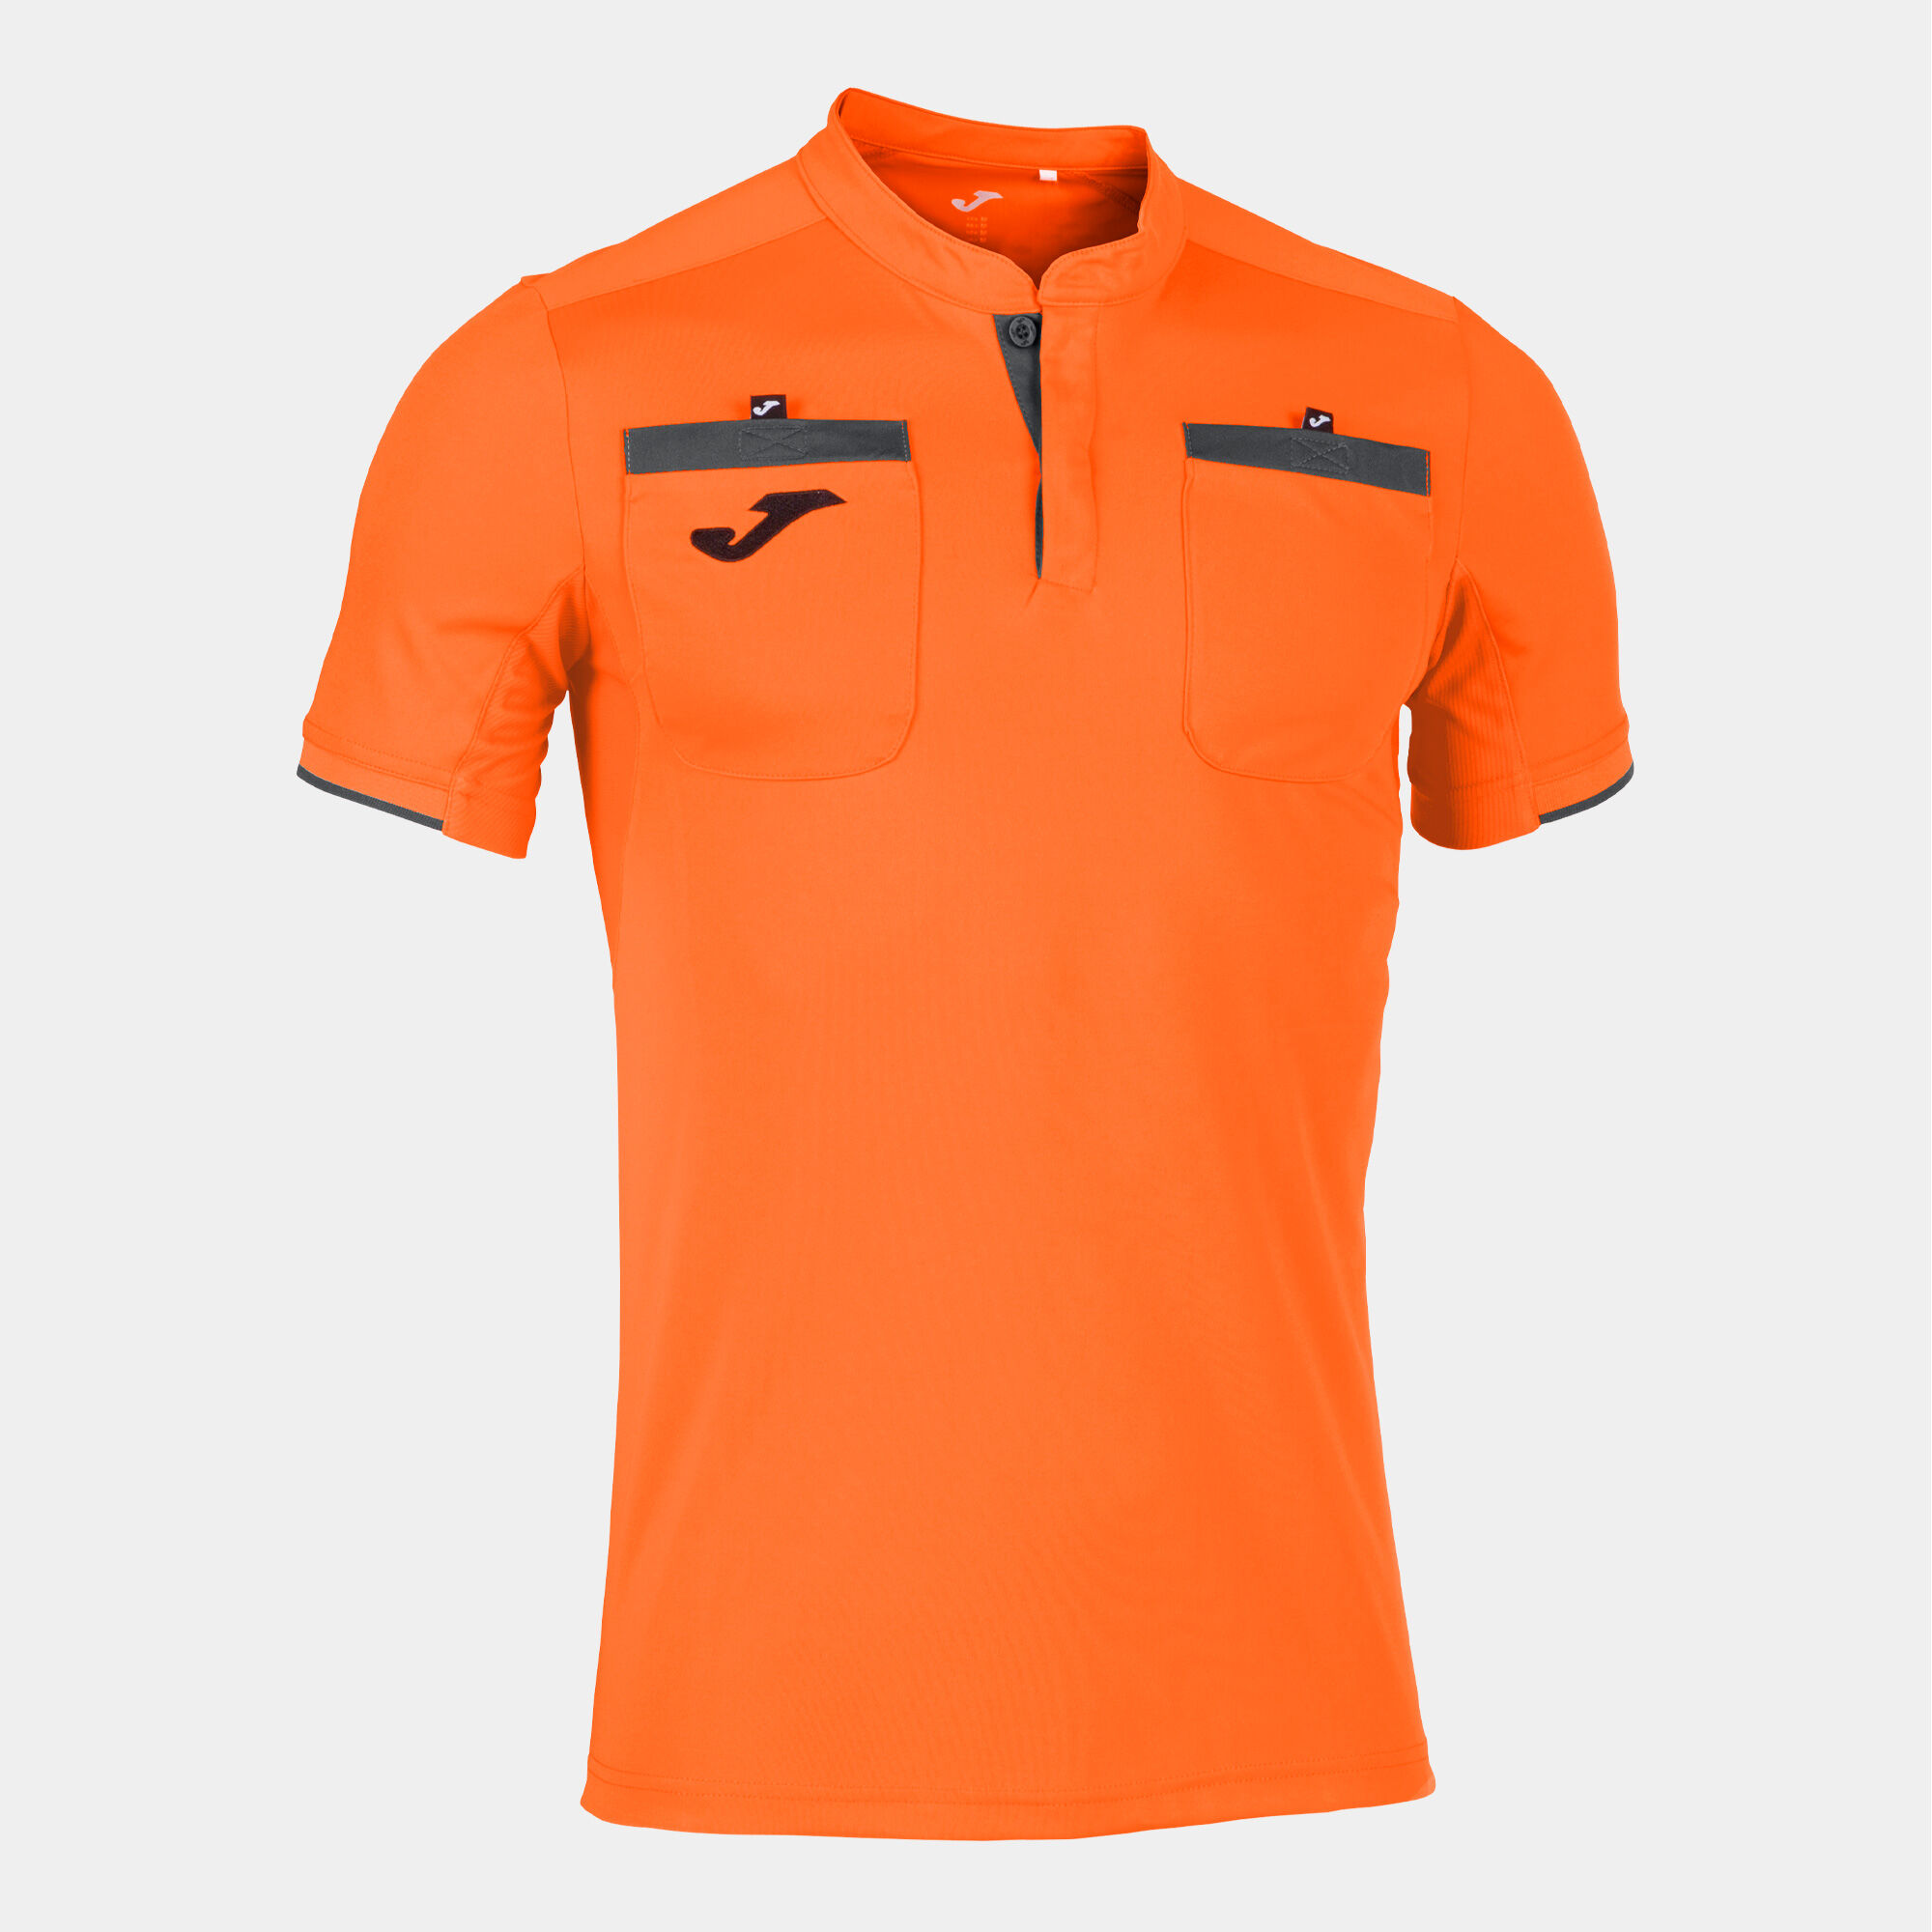 Camiseta manga corta hombre Referee naranja